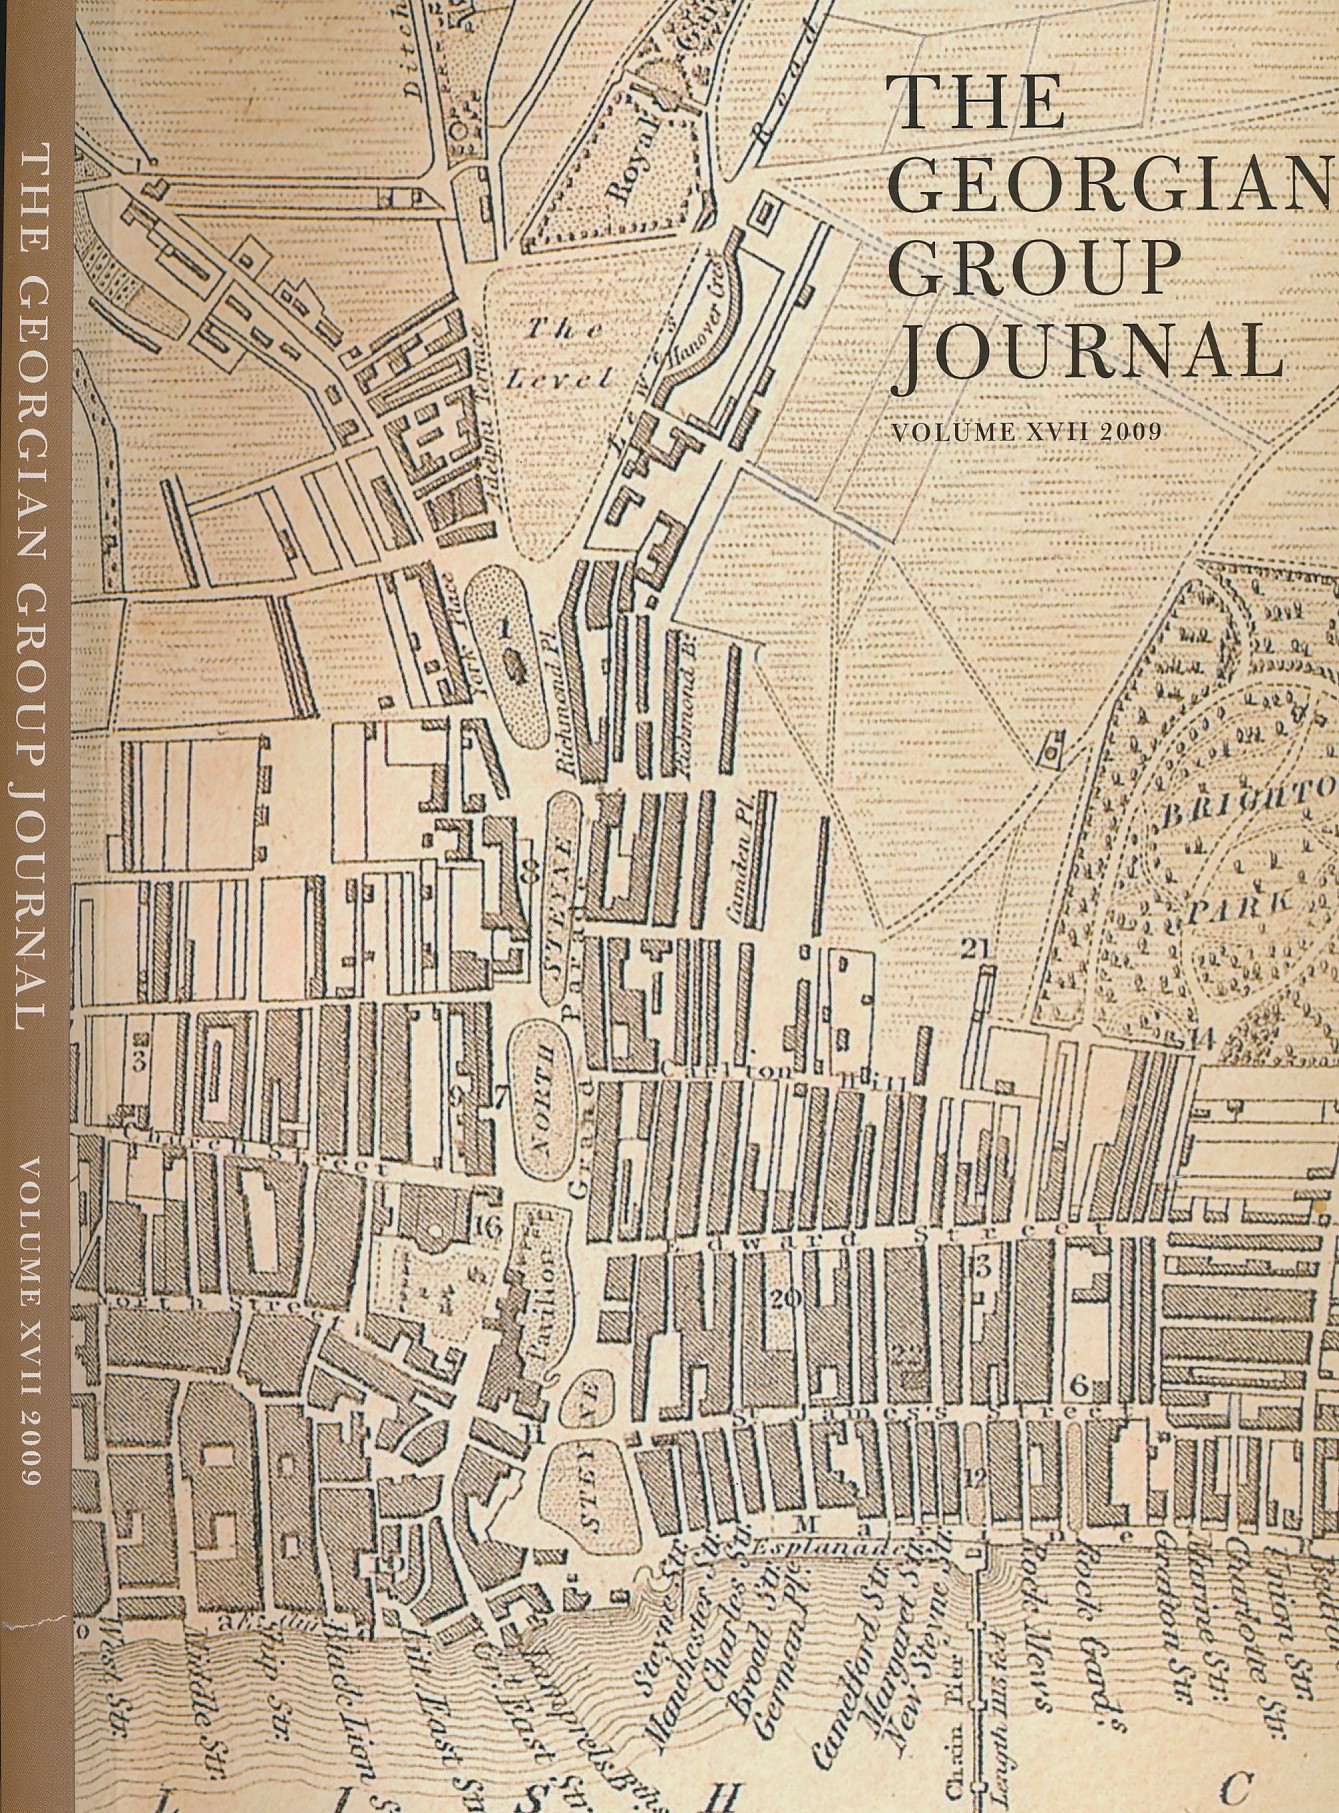 TYACK, GEOFFREY [ED.] - The Georgian Group Journal. Volume XVII. 2009